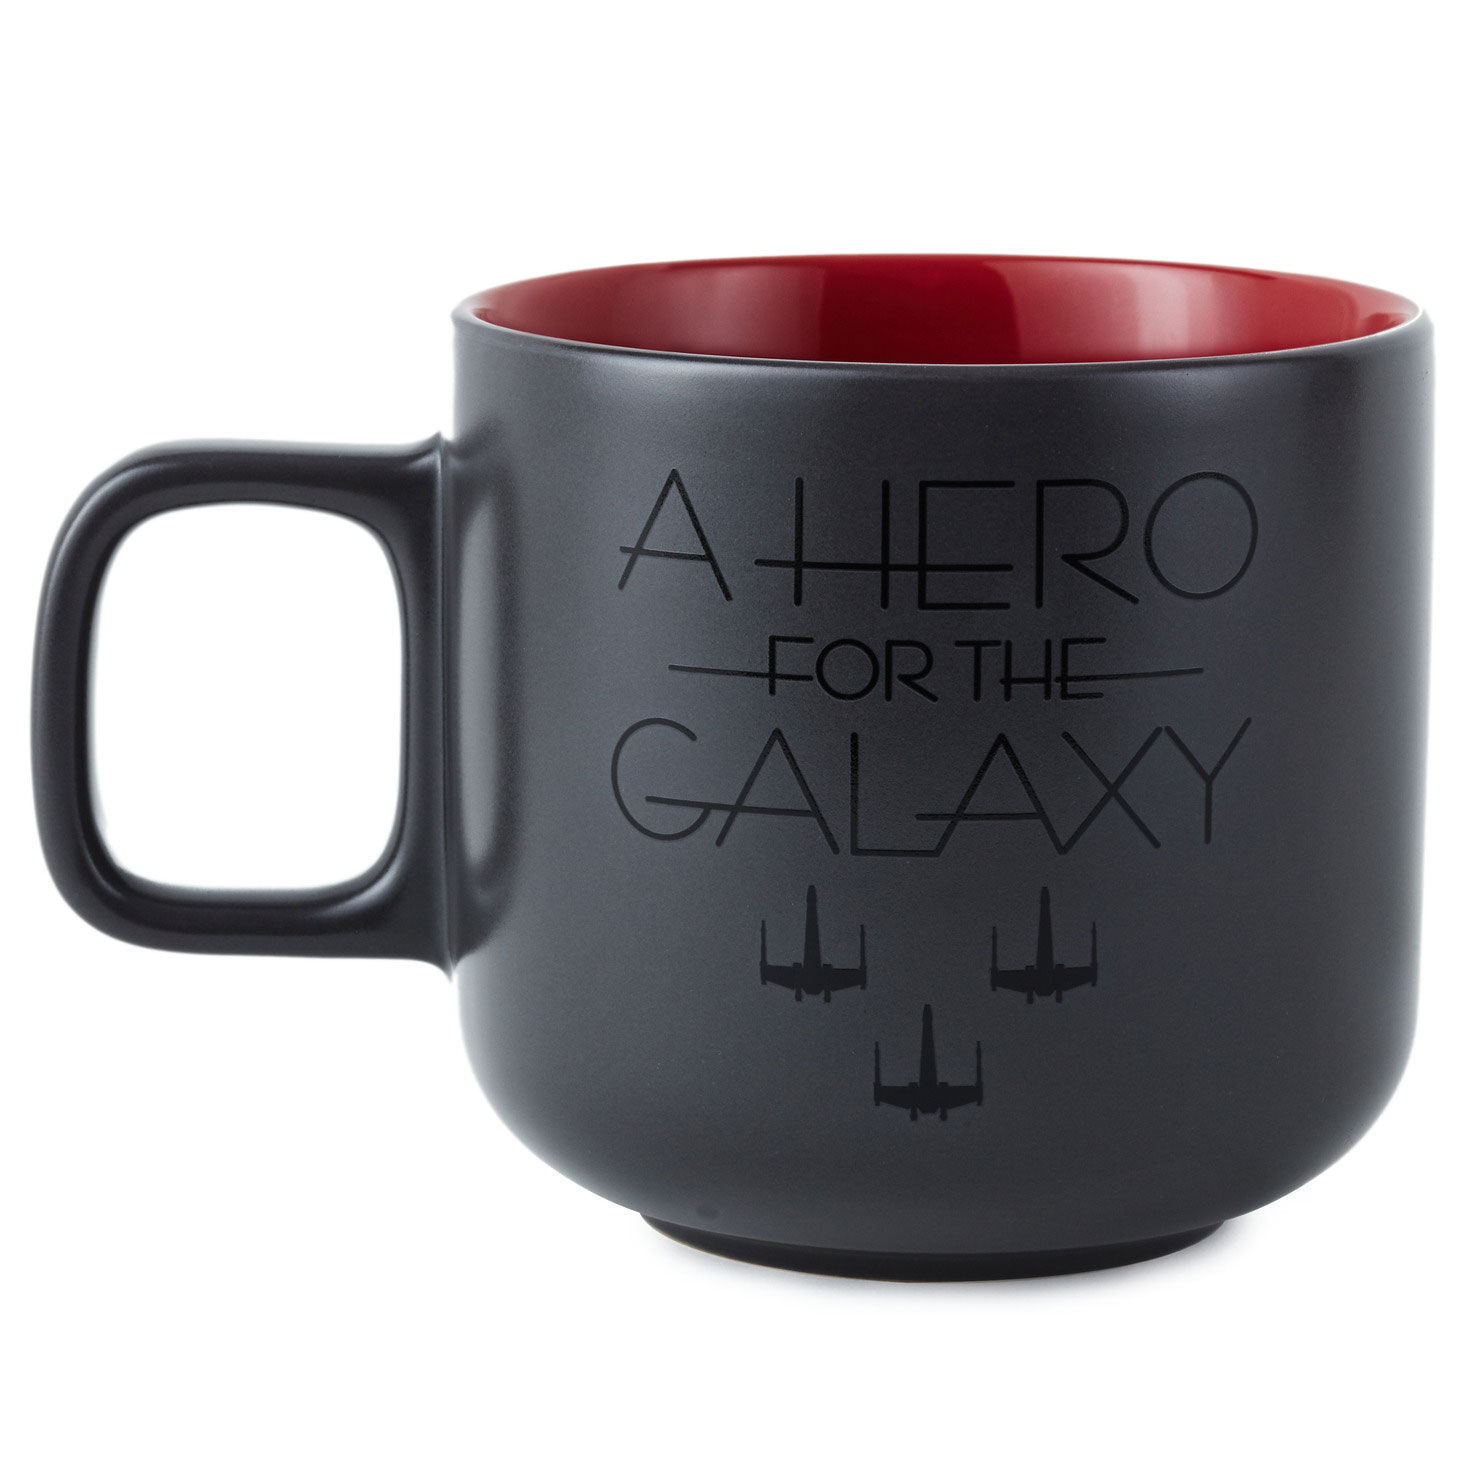 Star Wars Coffee Mug